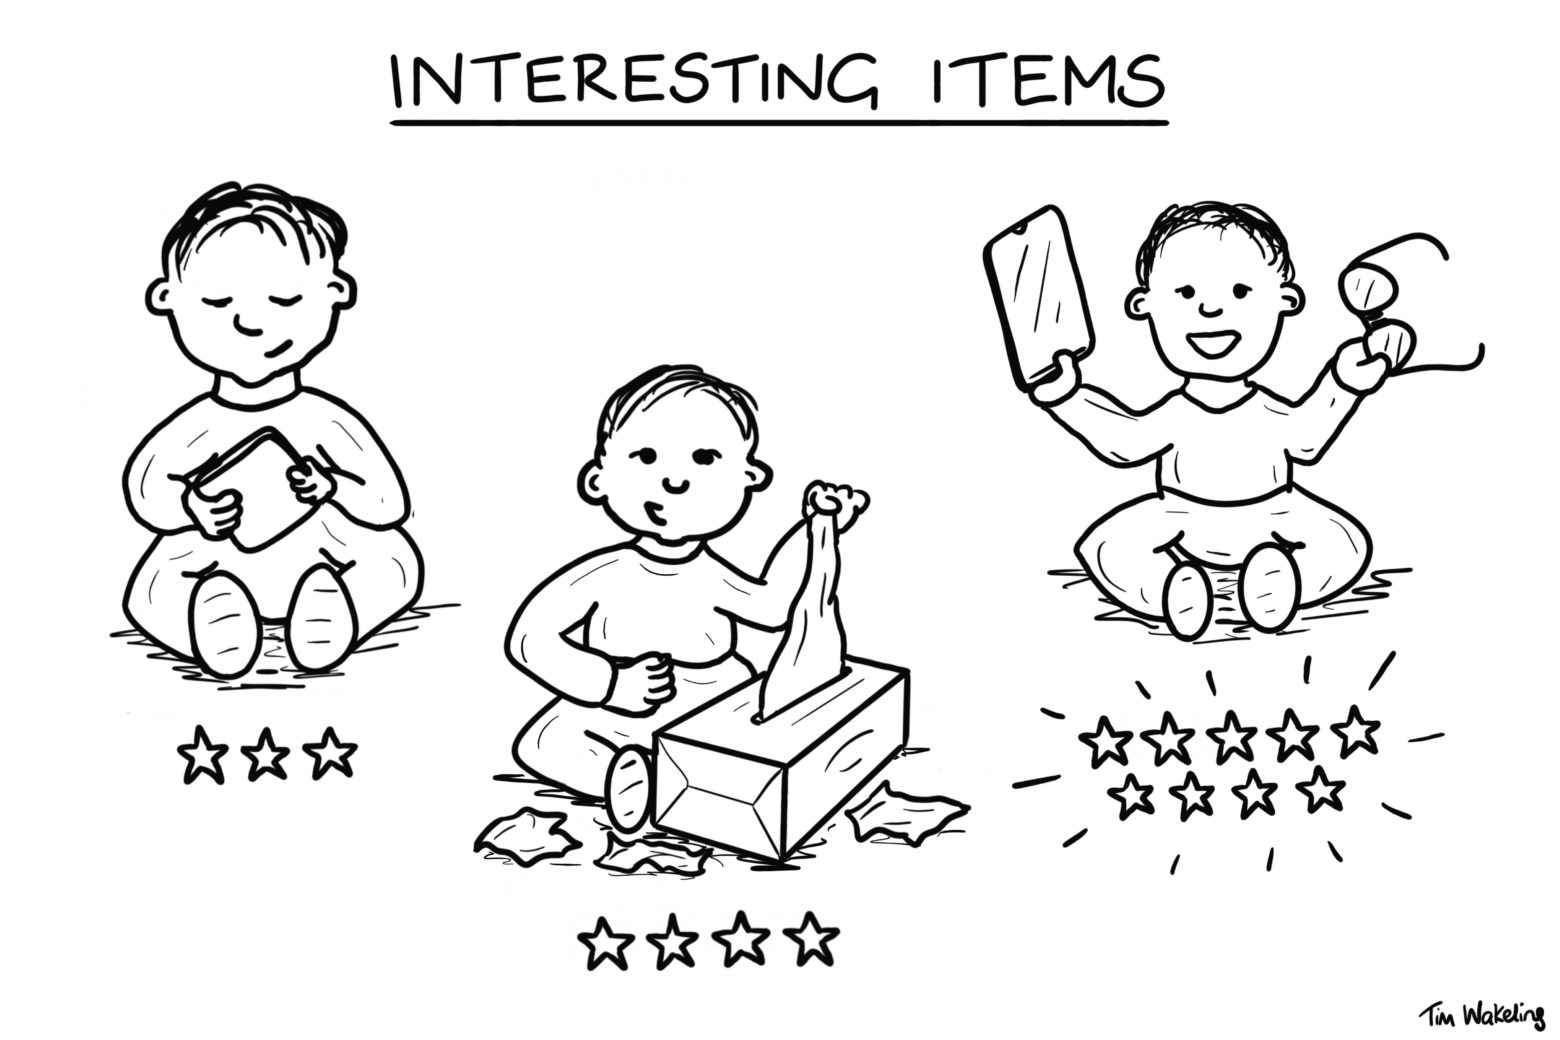 Baby cartoon - interesting items